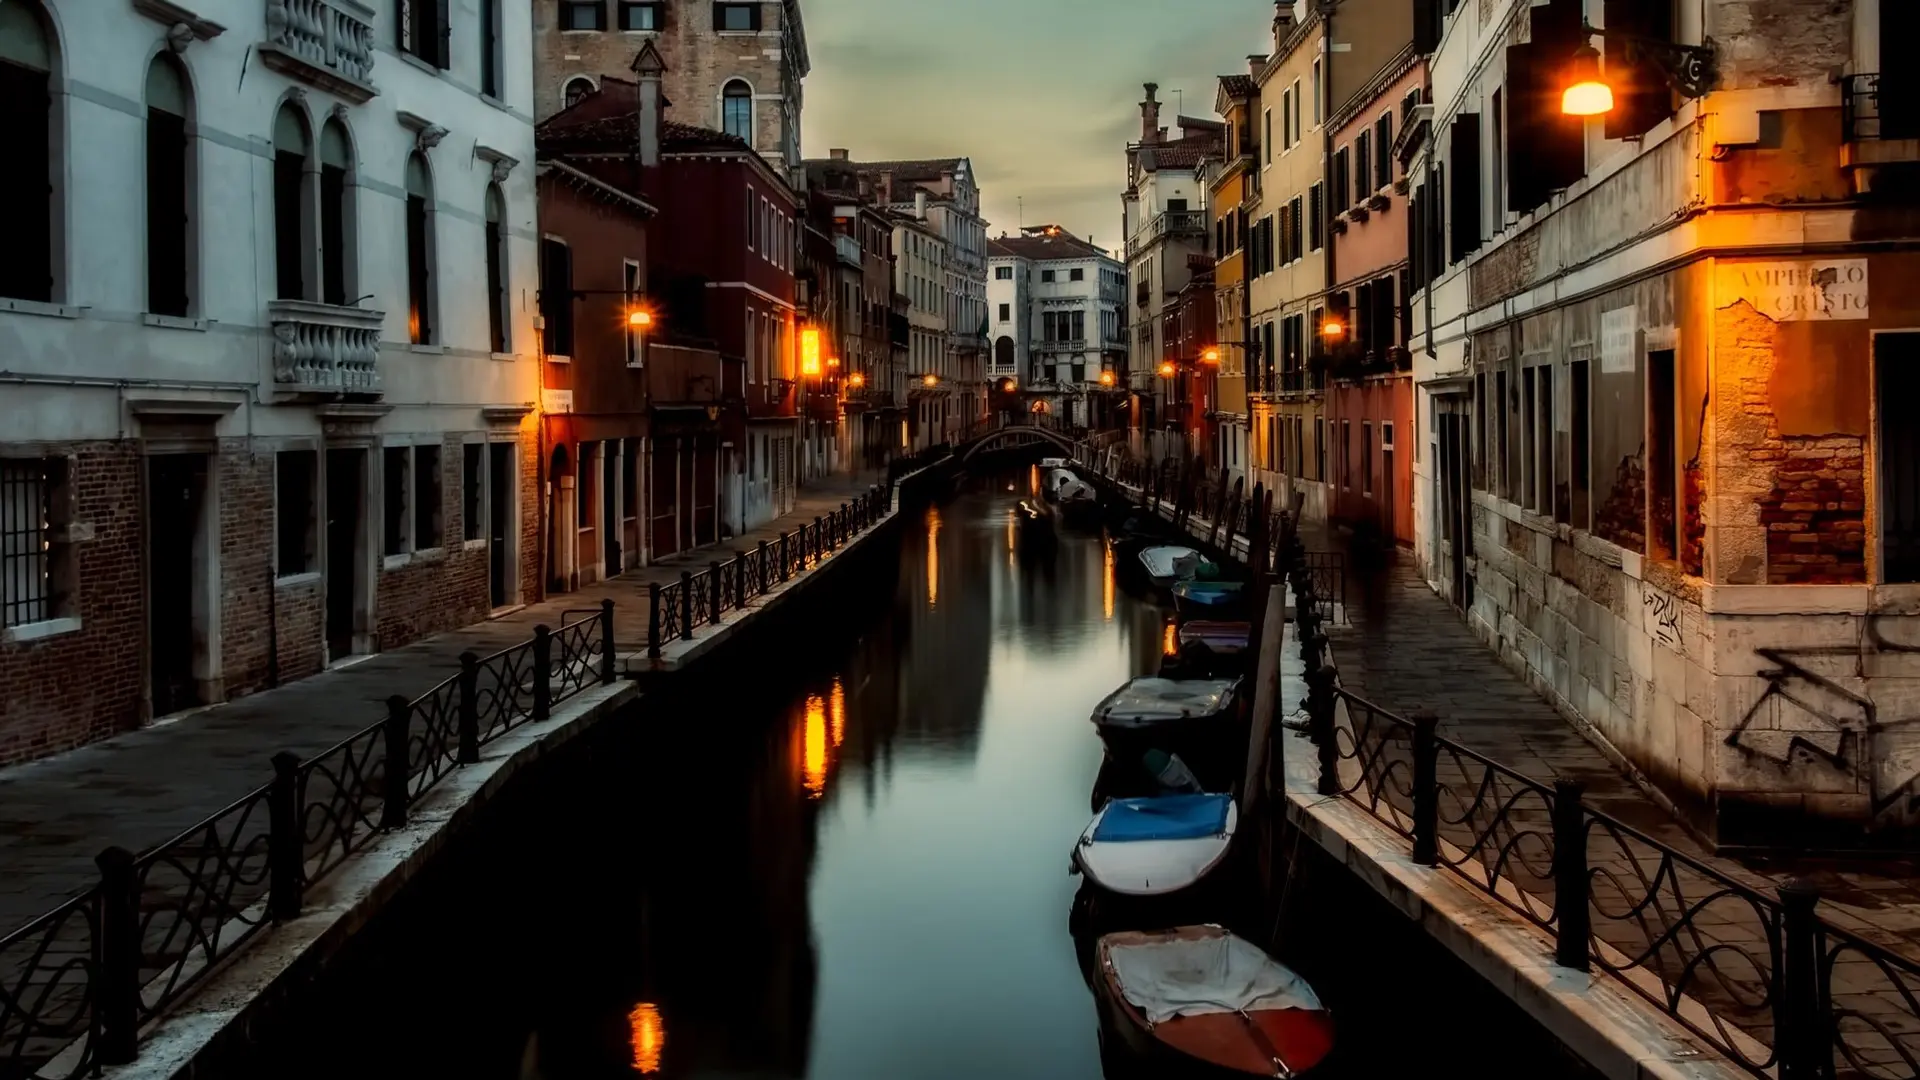 Destinations Articles - Venice Travel Guide